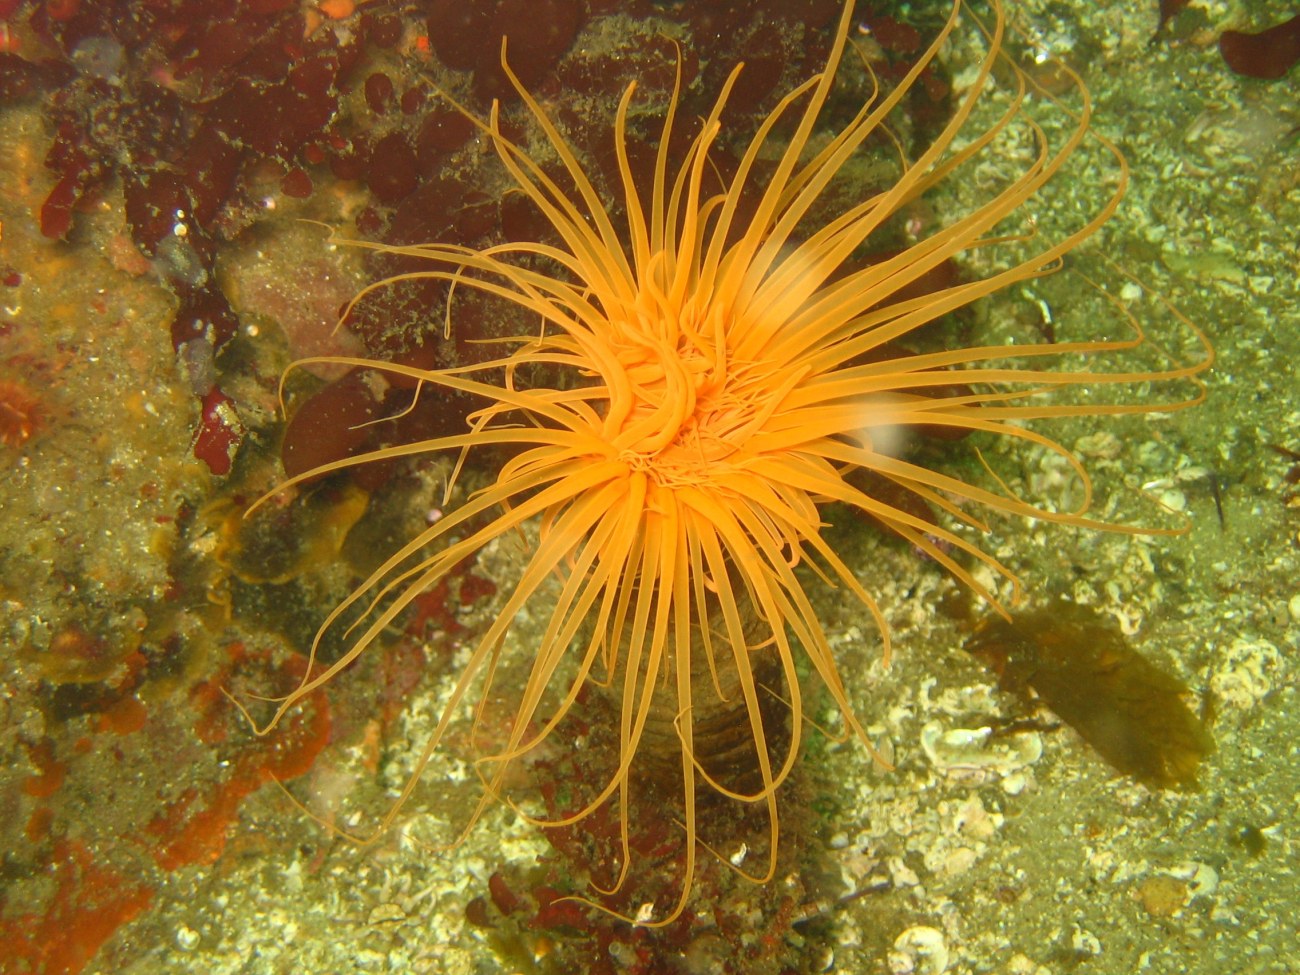 A golden cerianthid anemone (Pachycerianthus fimbriatus)